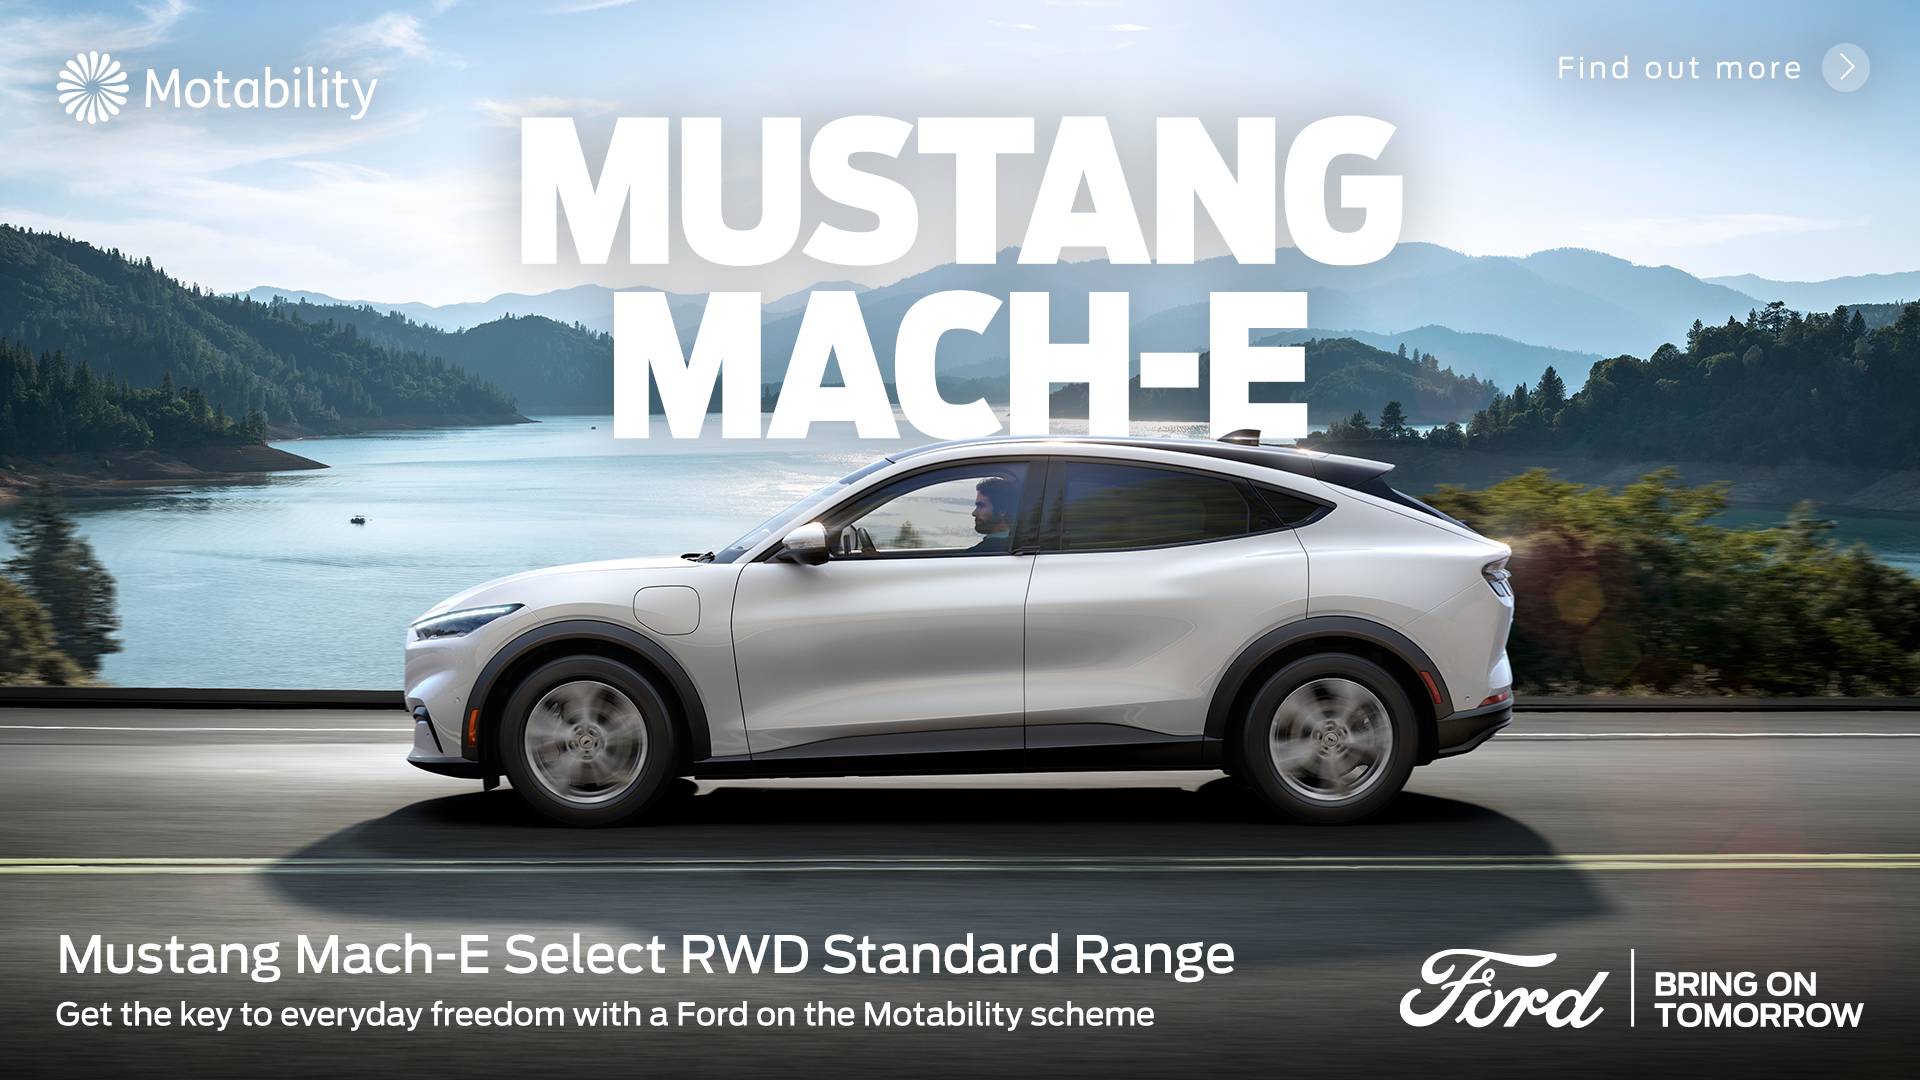 Ford Mustang Mach-E Motability